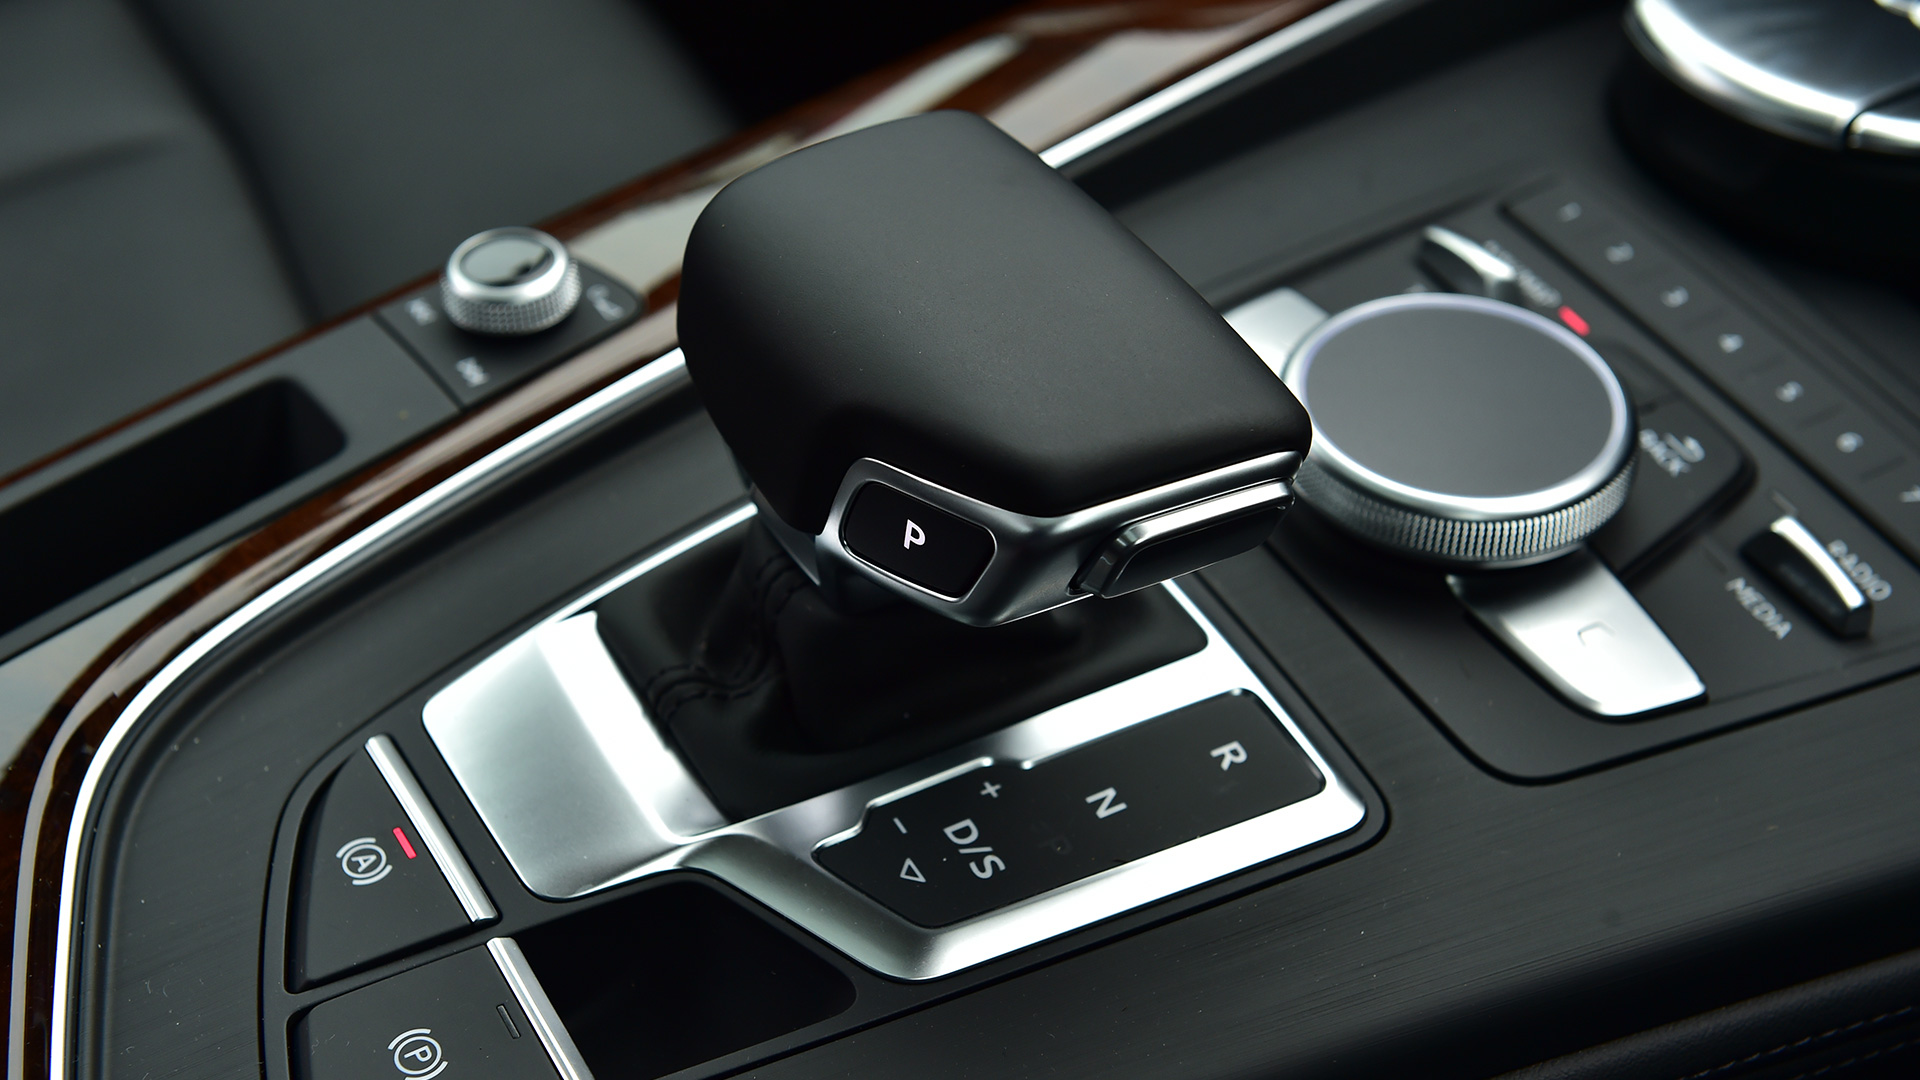 Audi A4 2016 30 TFSI Technology Interior